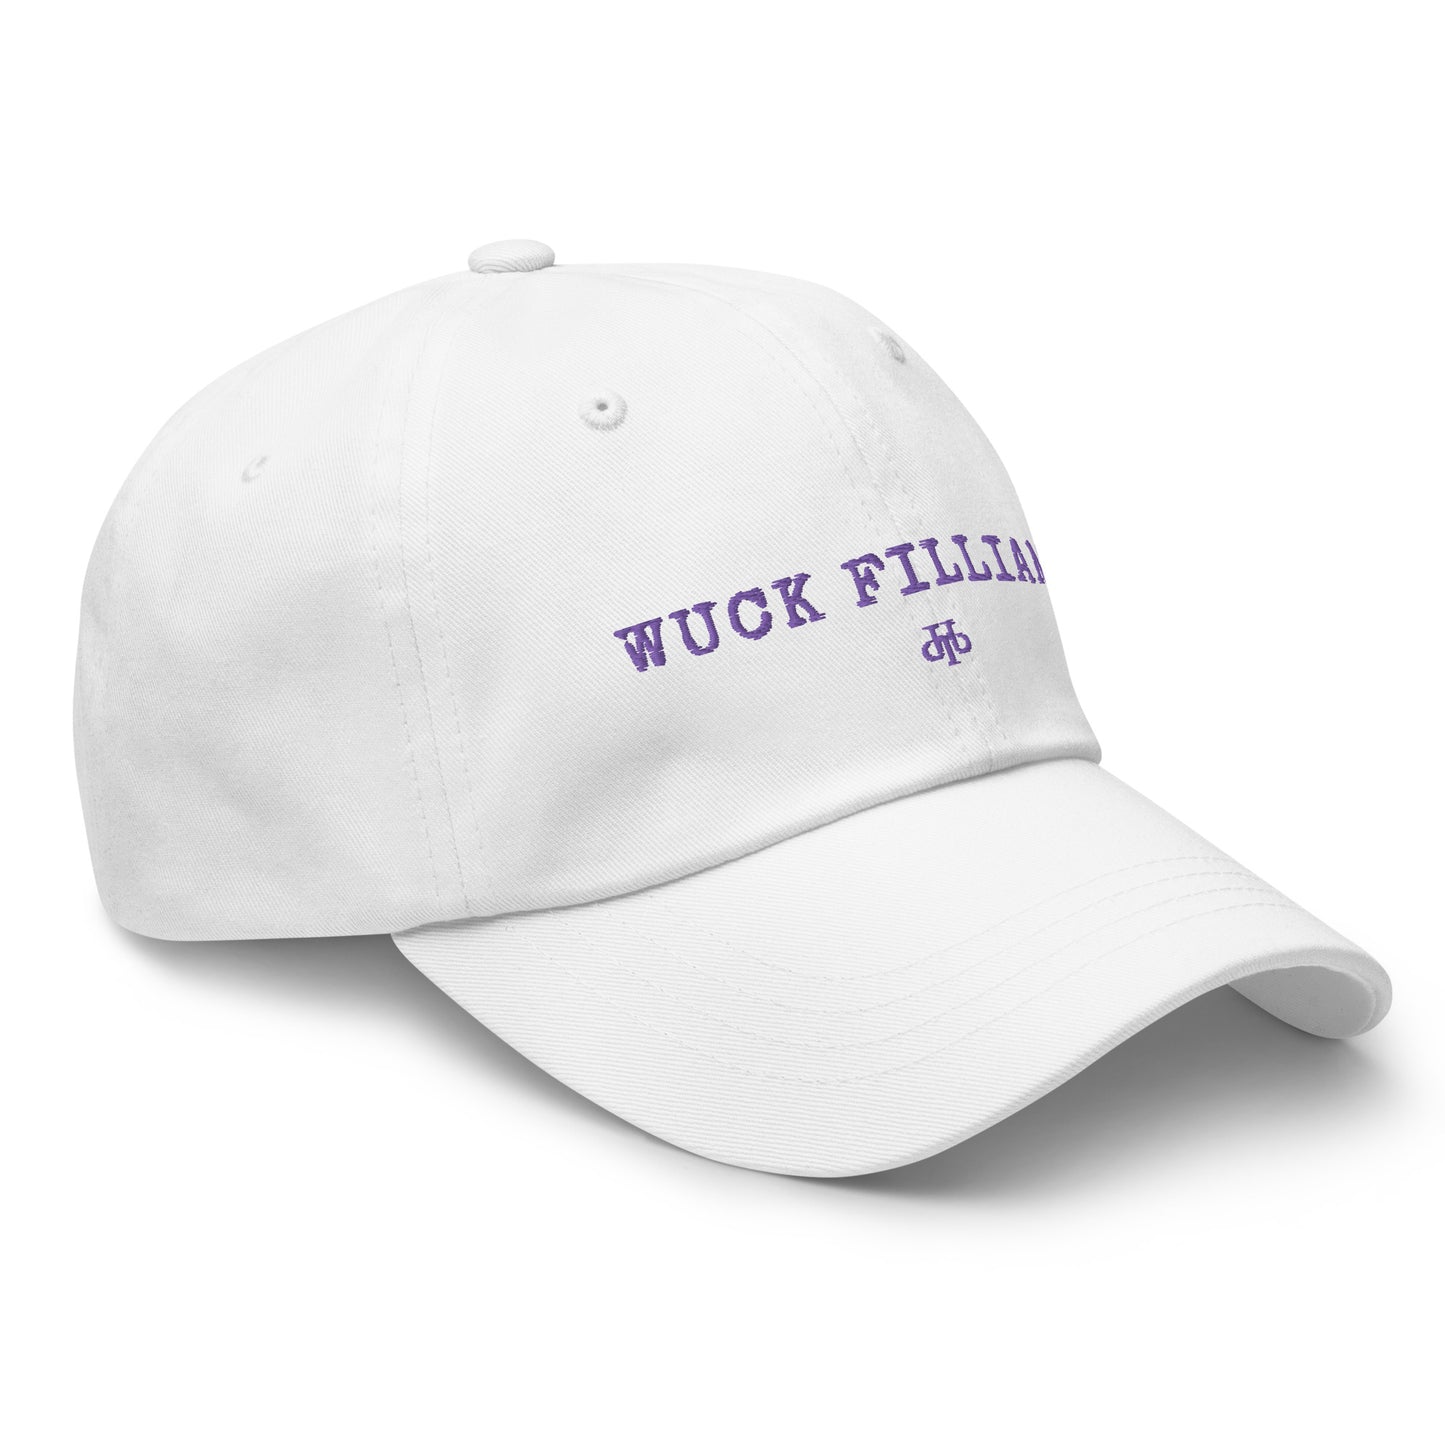 Wuck Filliams hat